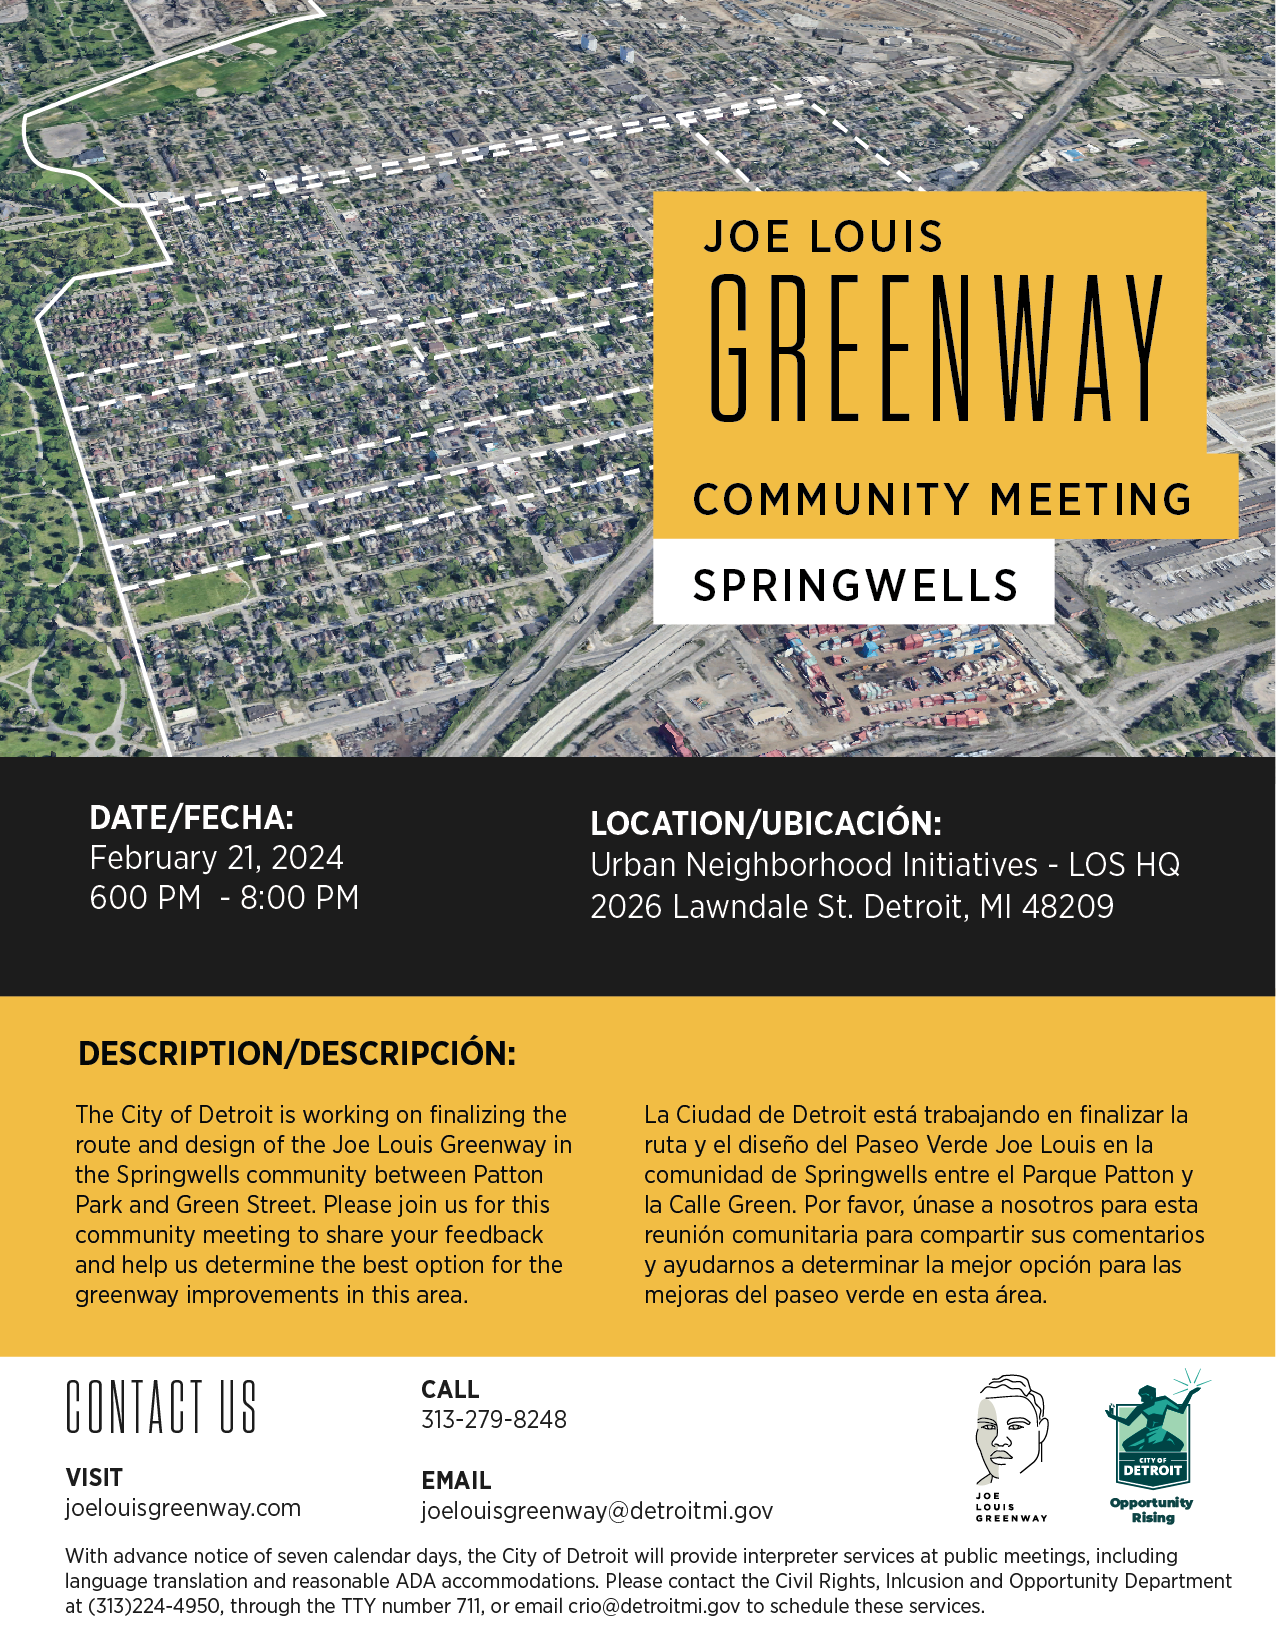 Springwells JLG Meeting Flyer